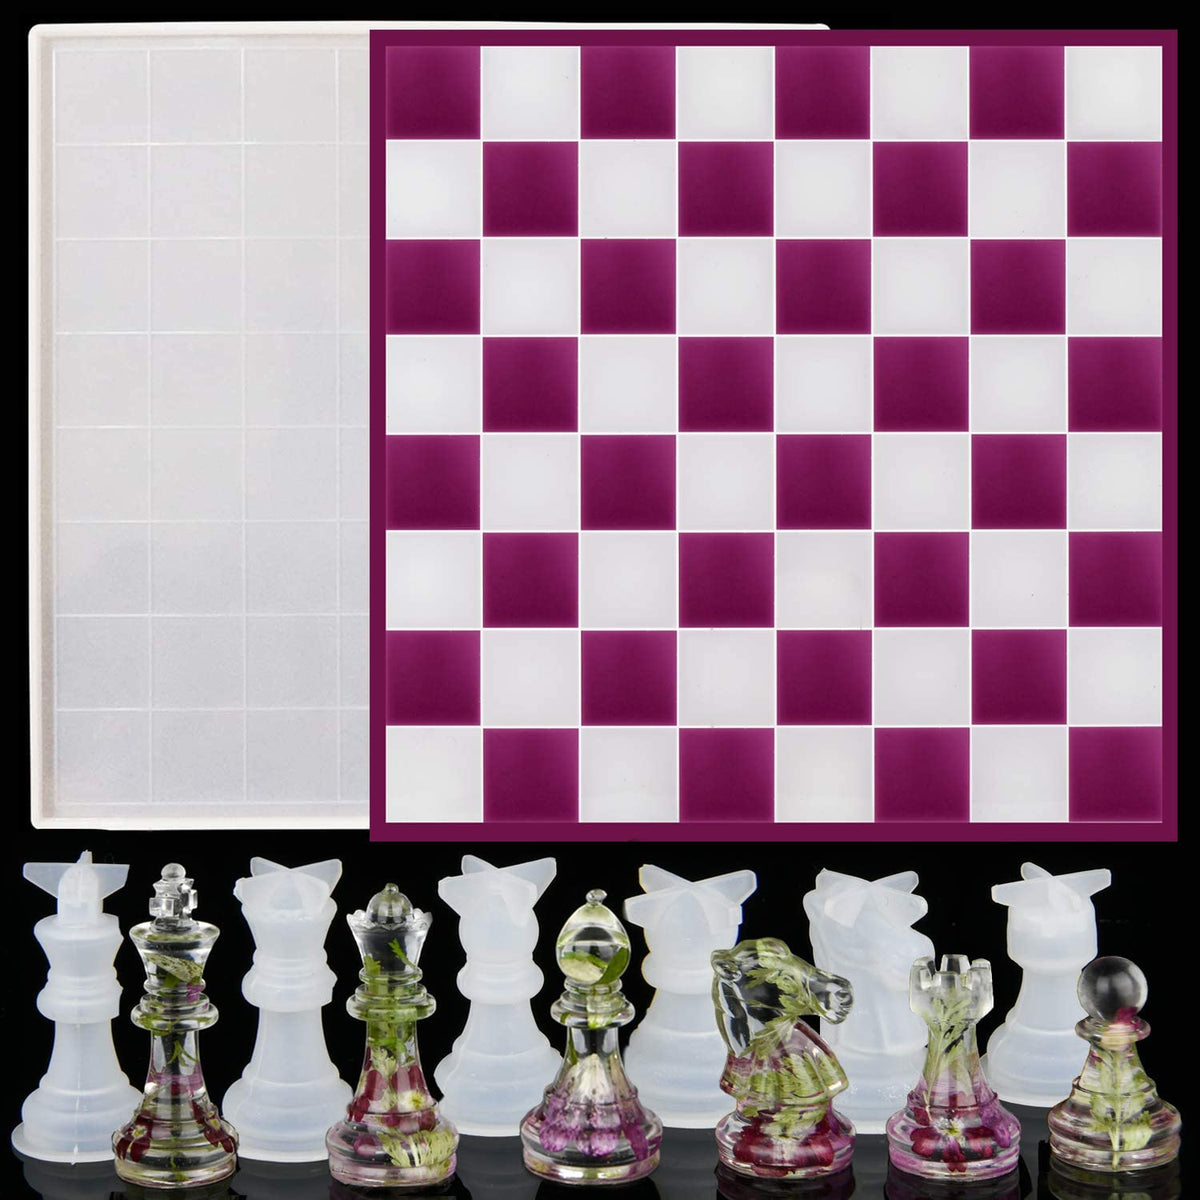 KingLEE Chess Board Resin Mold Set, 1 Pcs Large Checker Board